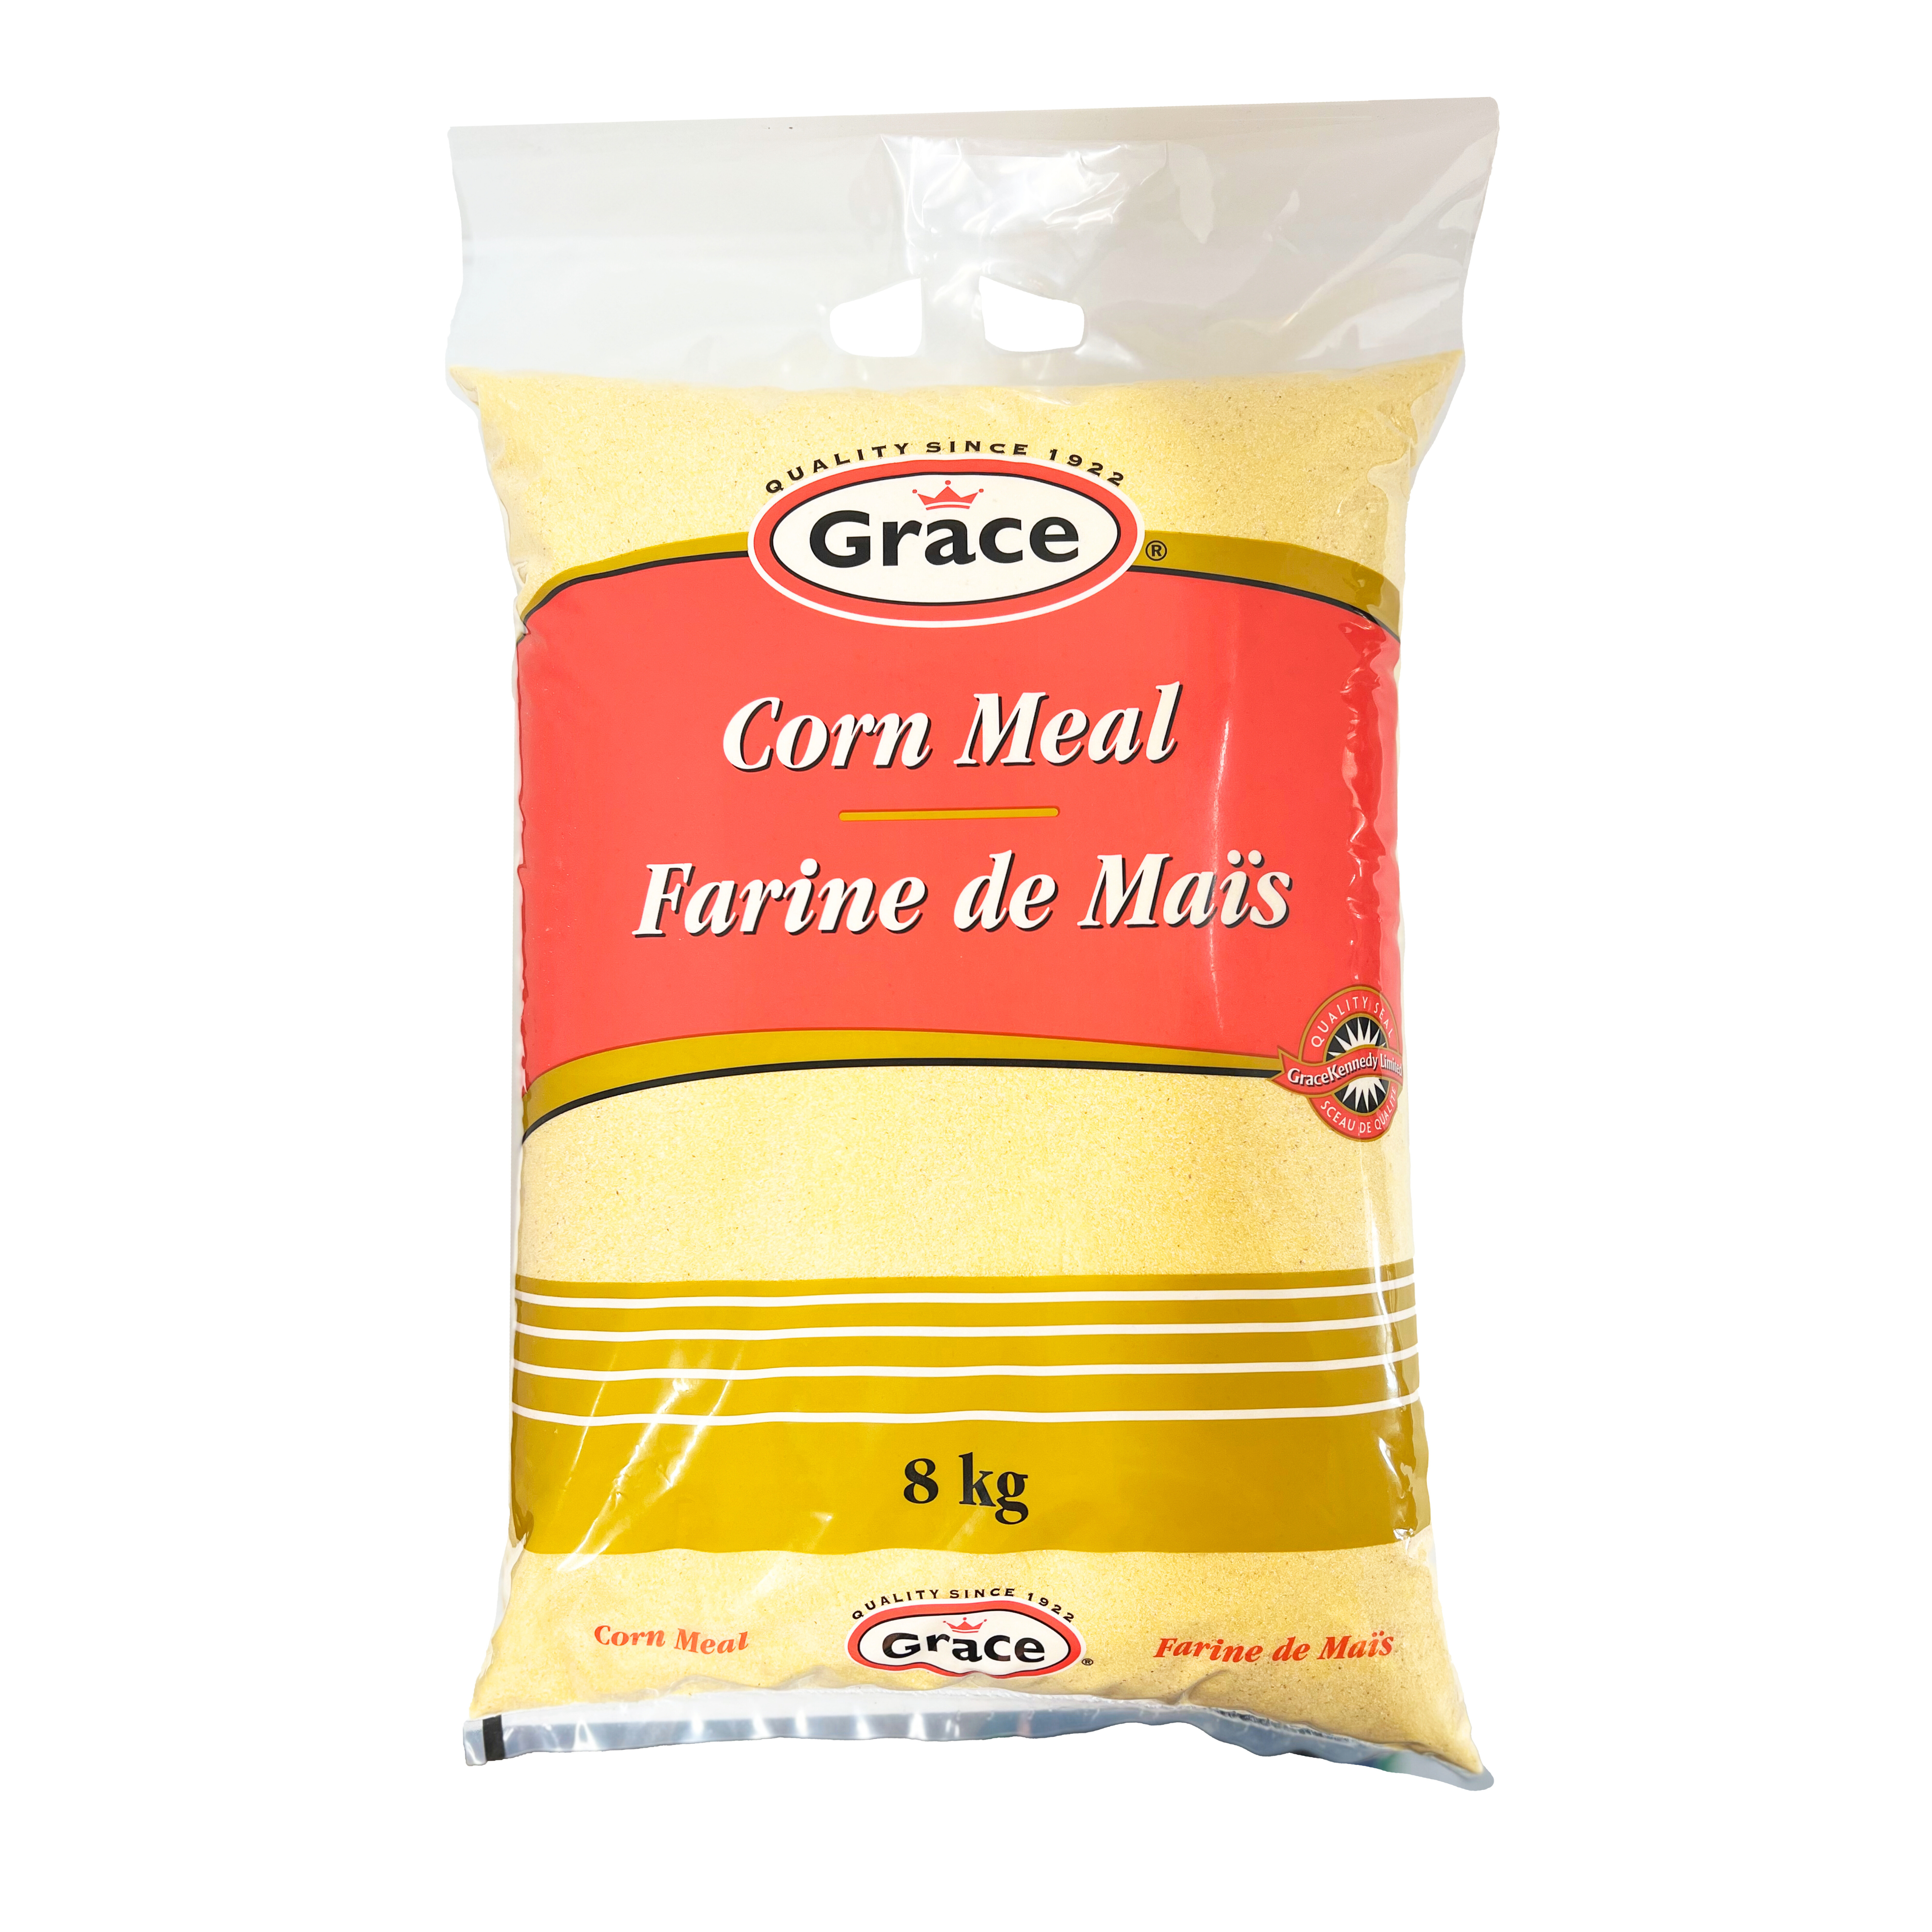 Grace Corn Meal 8 Kg